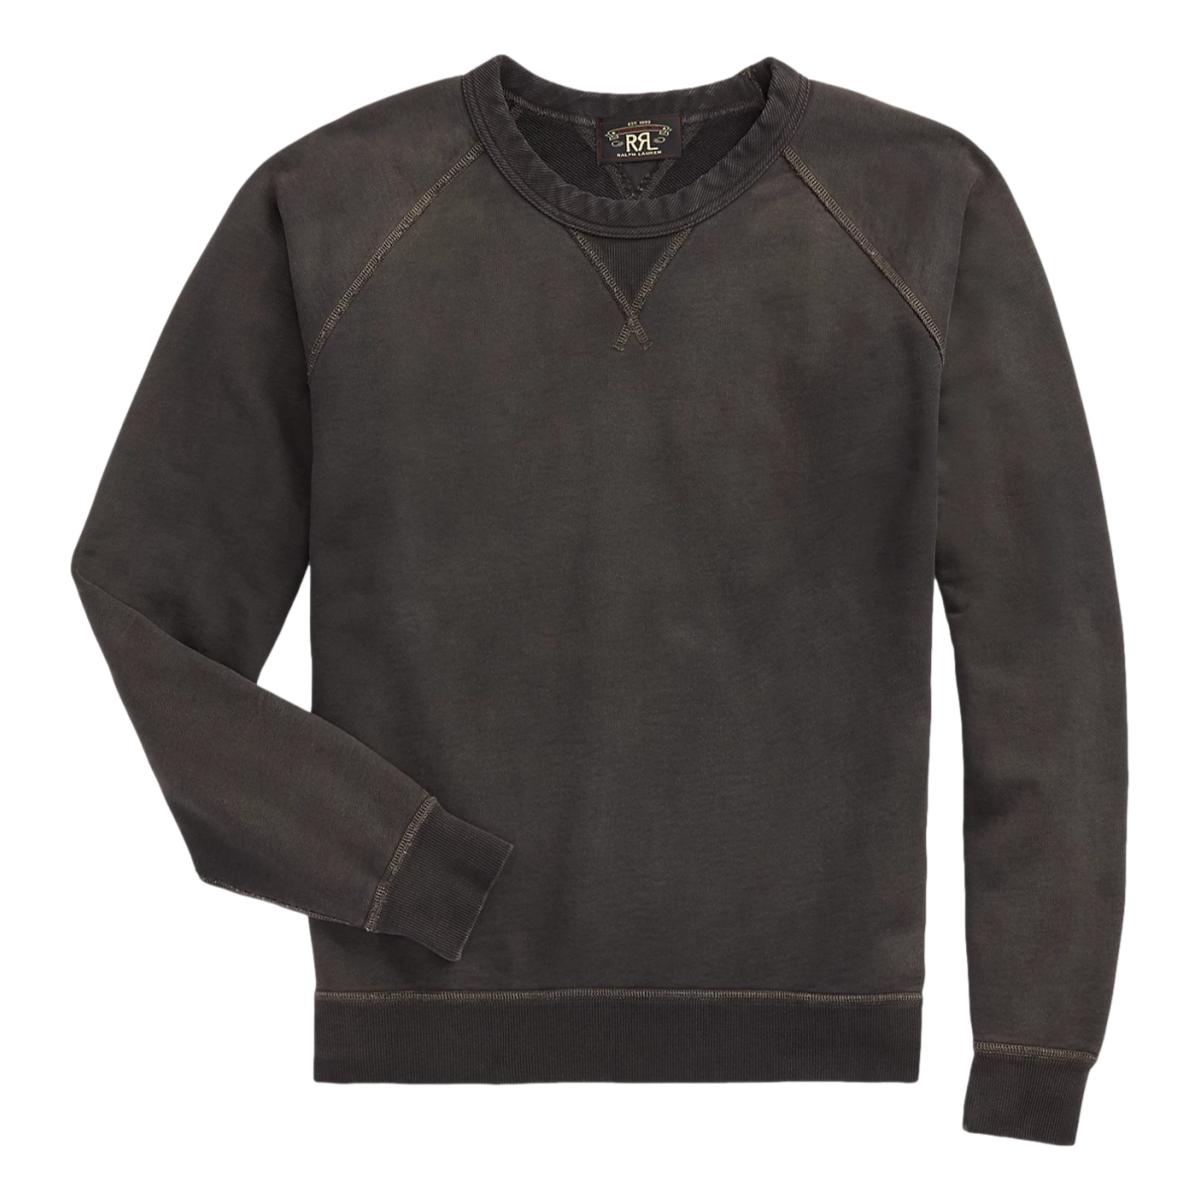 French Terry Crewneck Black Indigo - Sweatshirt